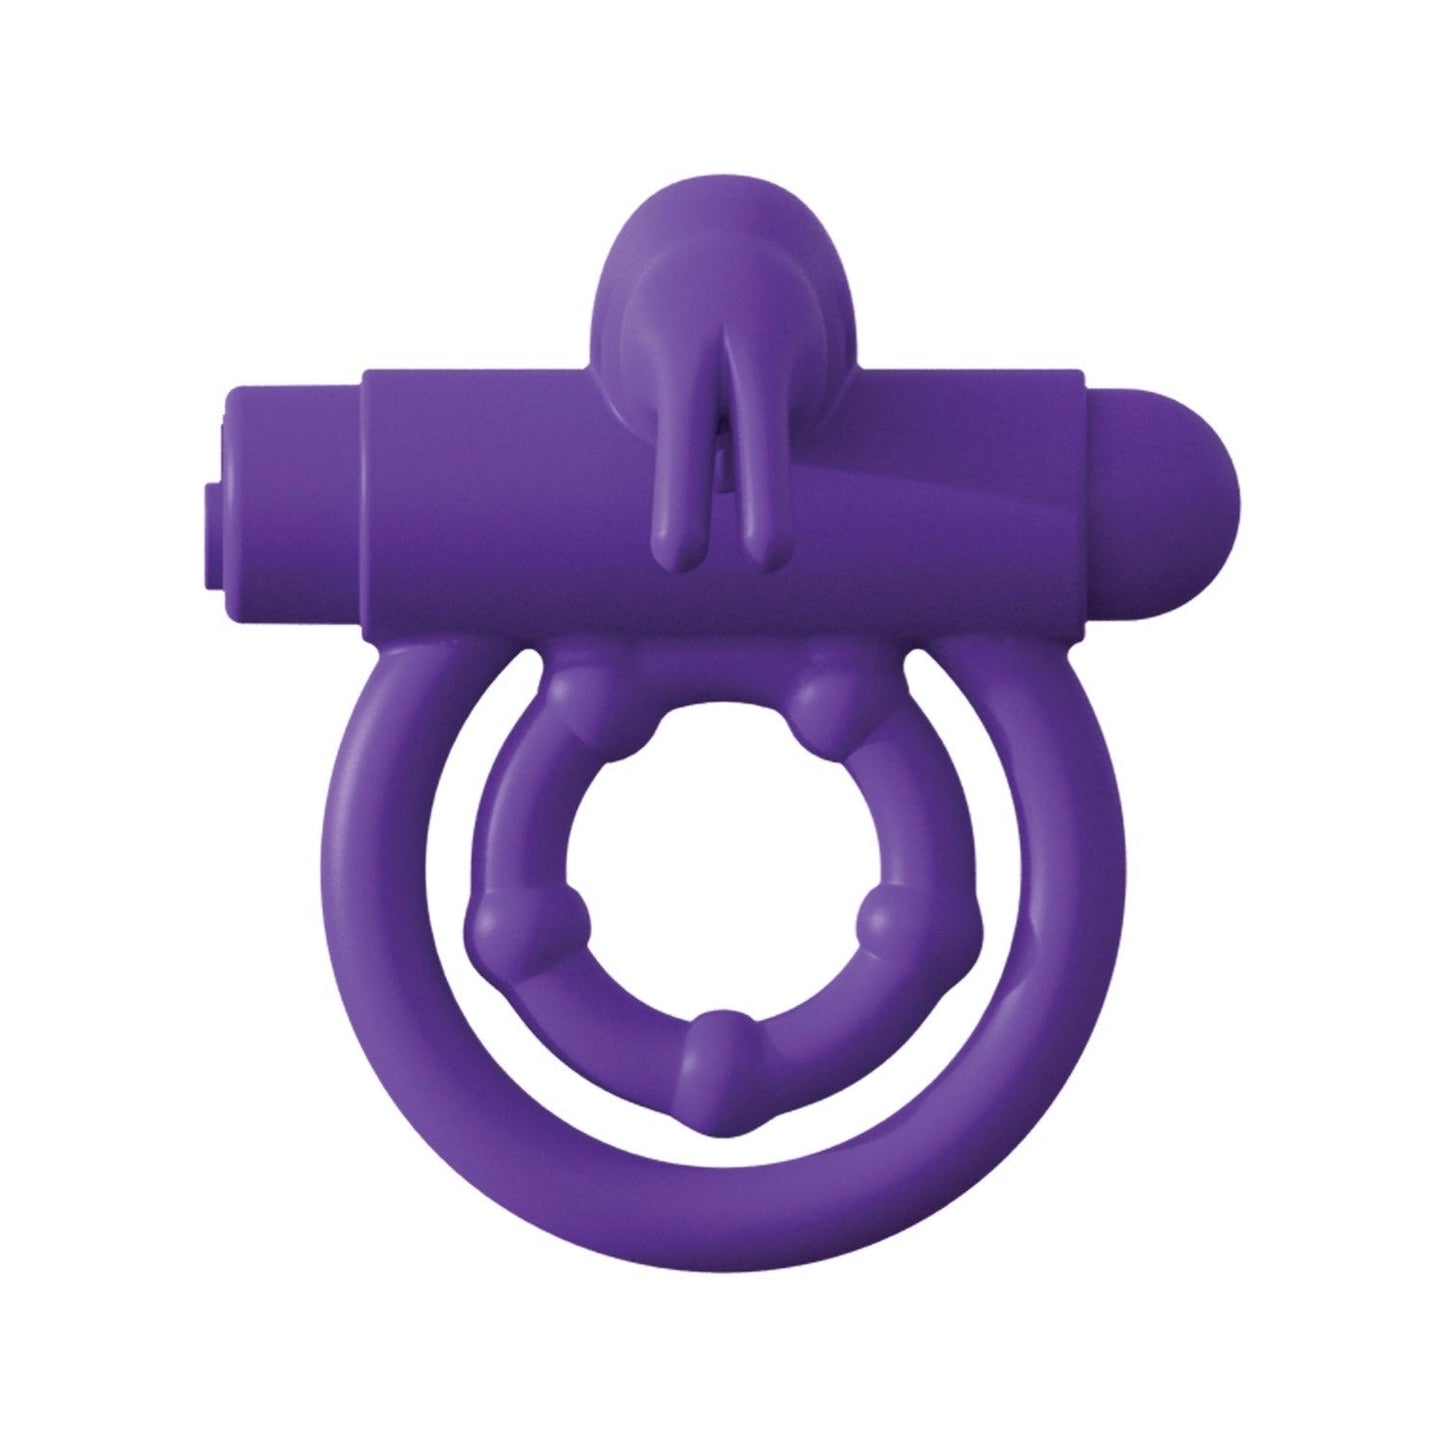 Fantasy C-ringz Reomote Control Rabbit Ring - Purple Vibrating Cock & Balls Ring with Remote Control